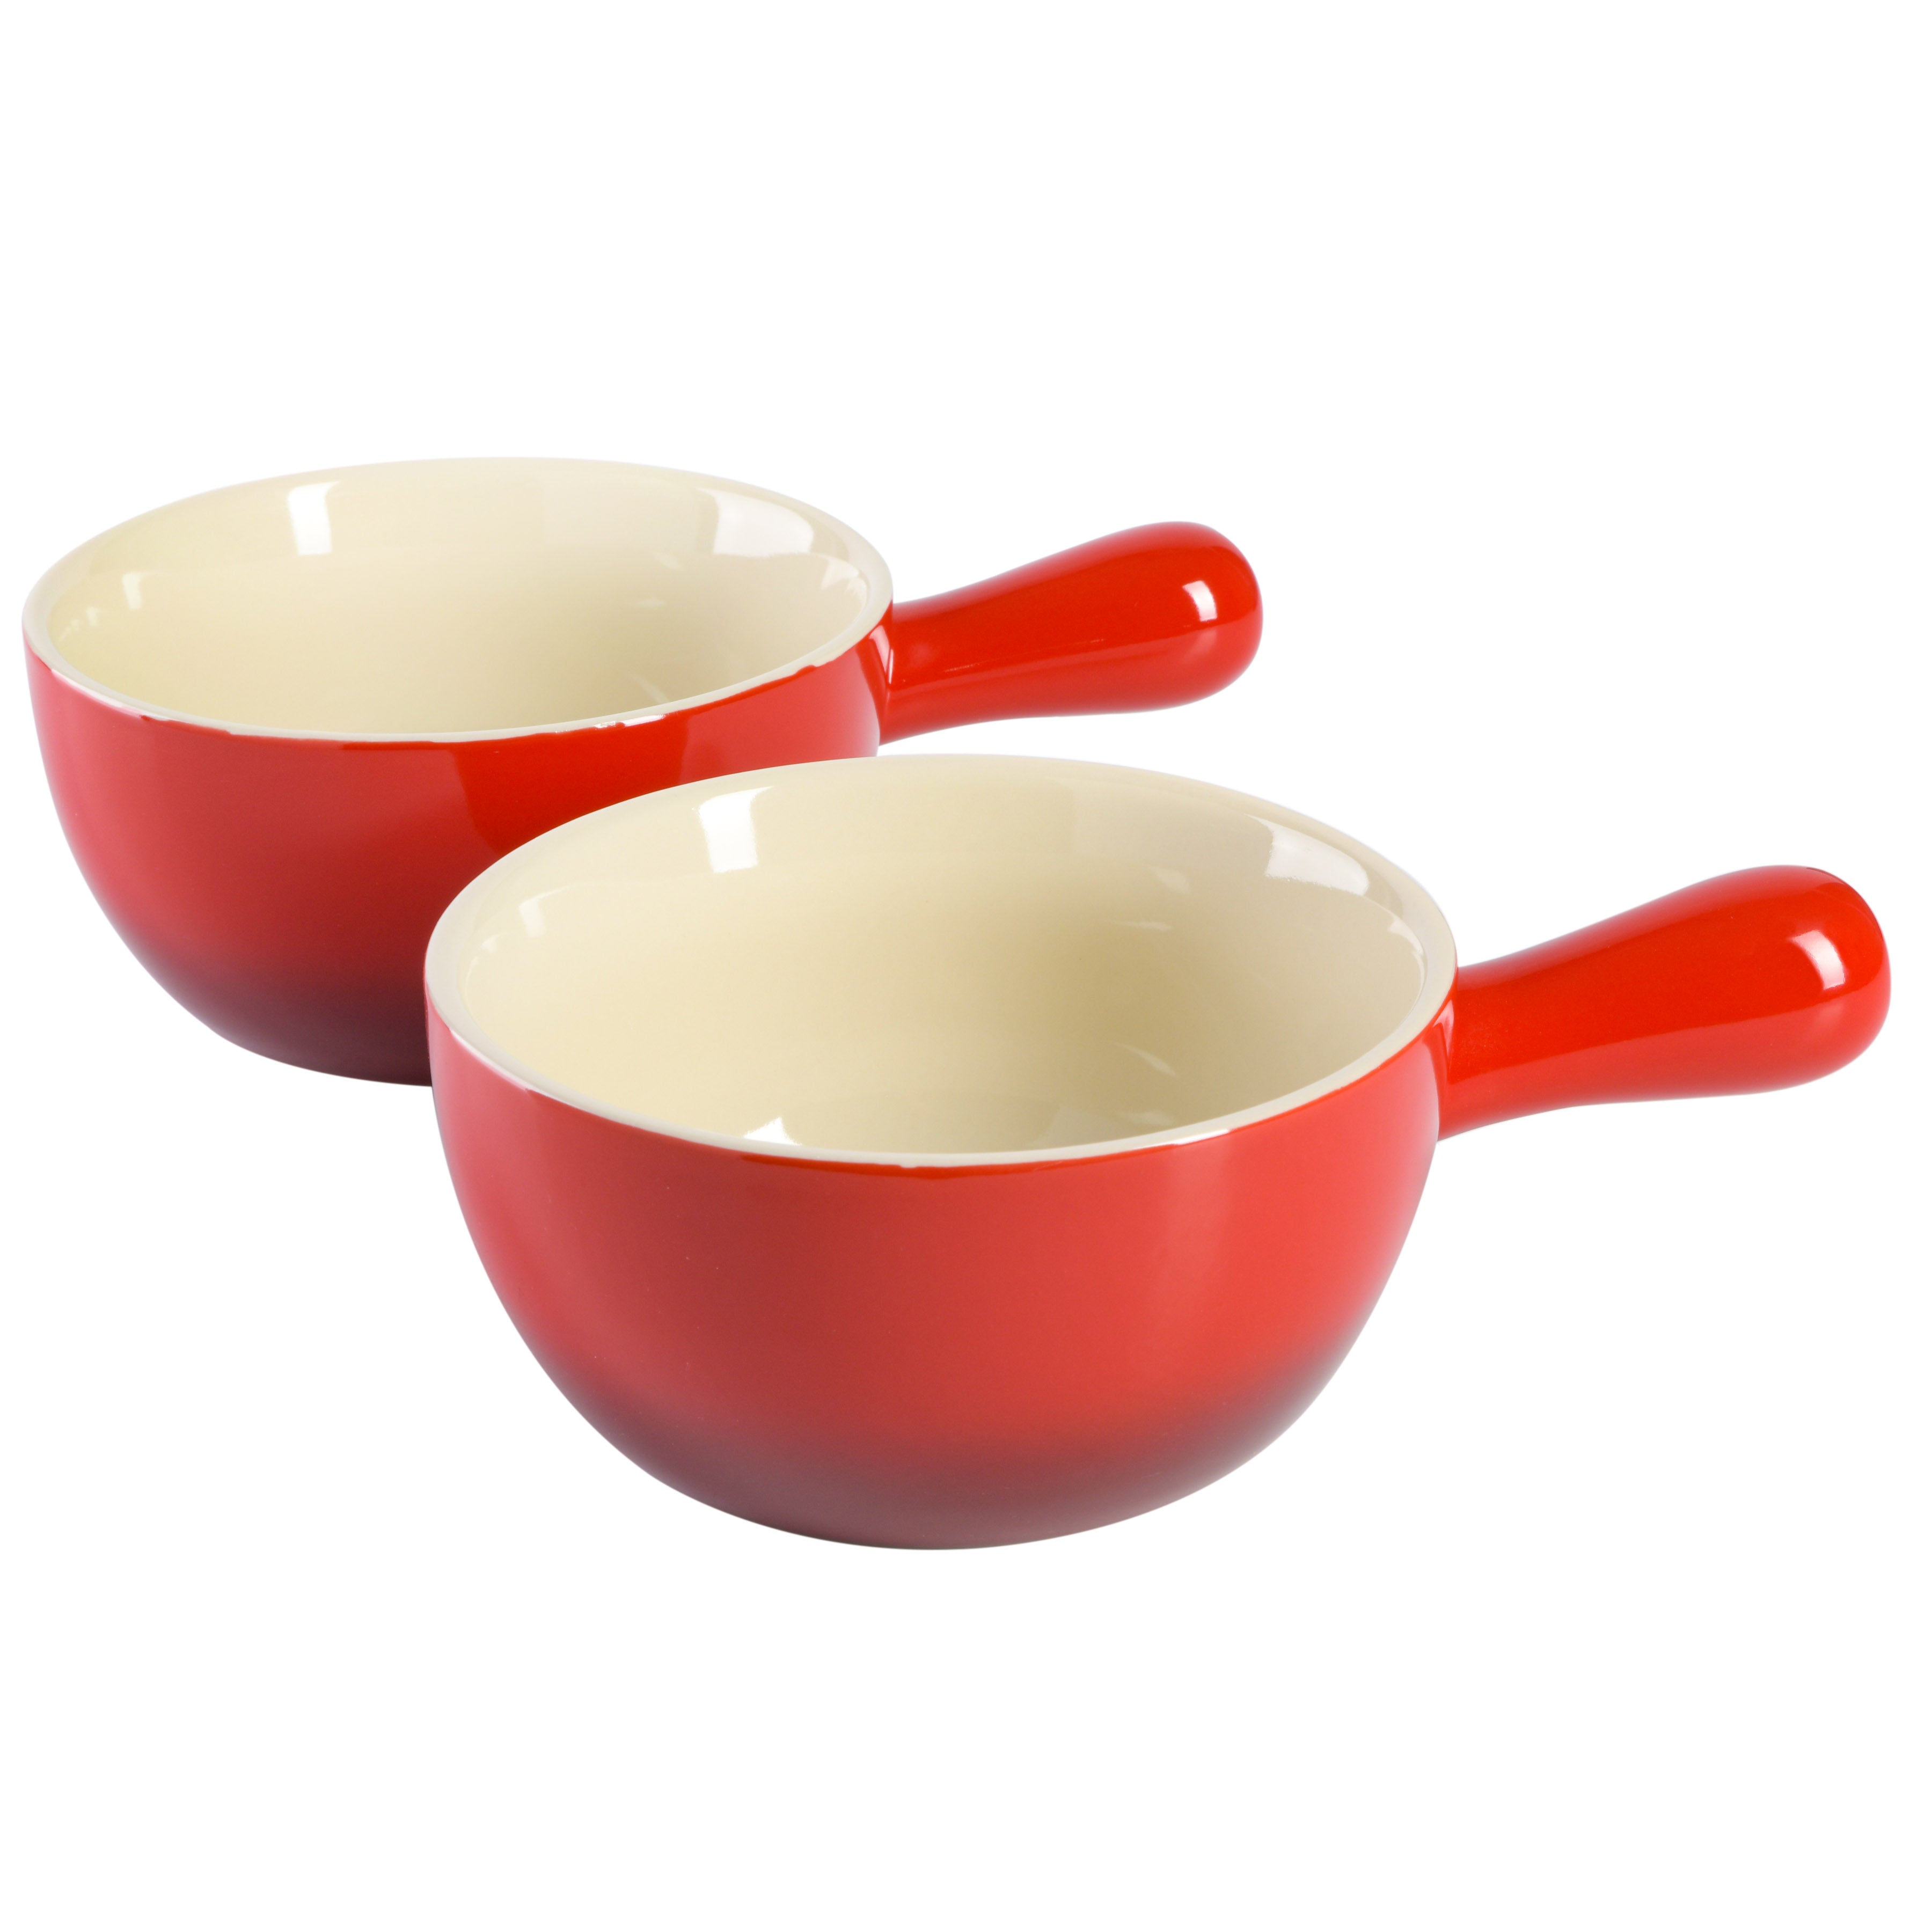 Crock Pot 2 Piece Stoneware 30oz Soup Bowl Set with Handles in Gradient Teal